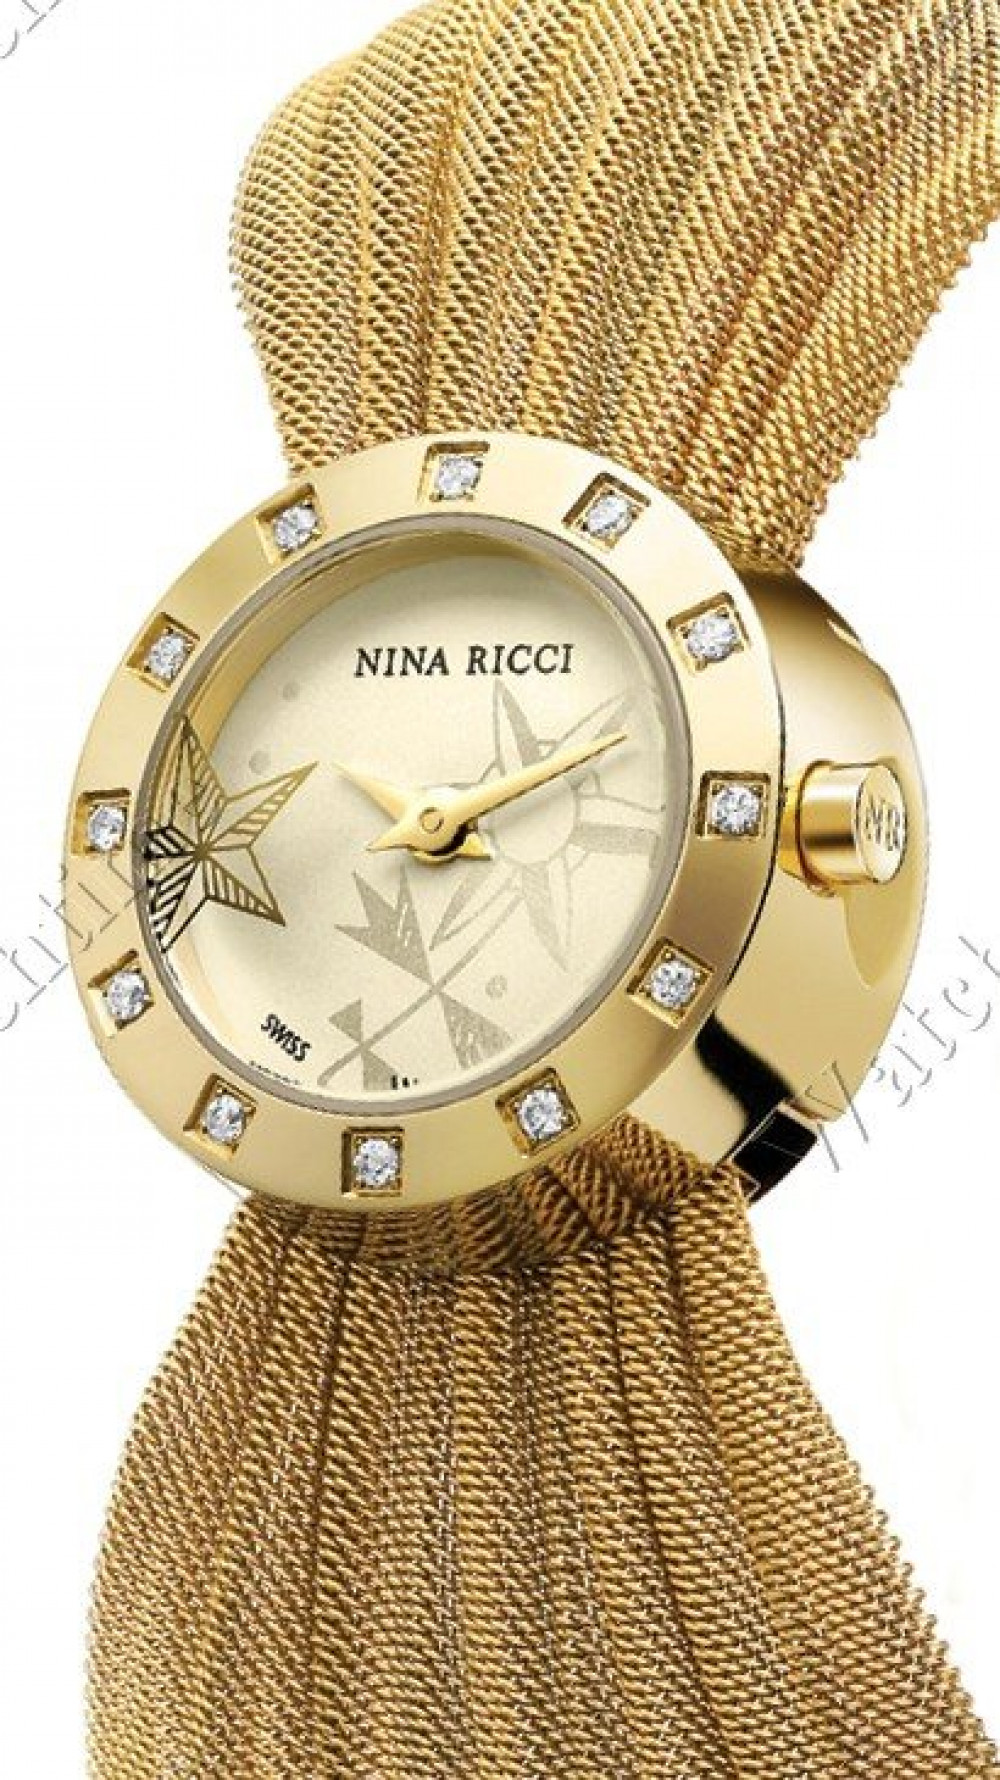 Zegarek firmy Nina Ricci, model Lady Quartz